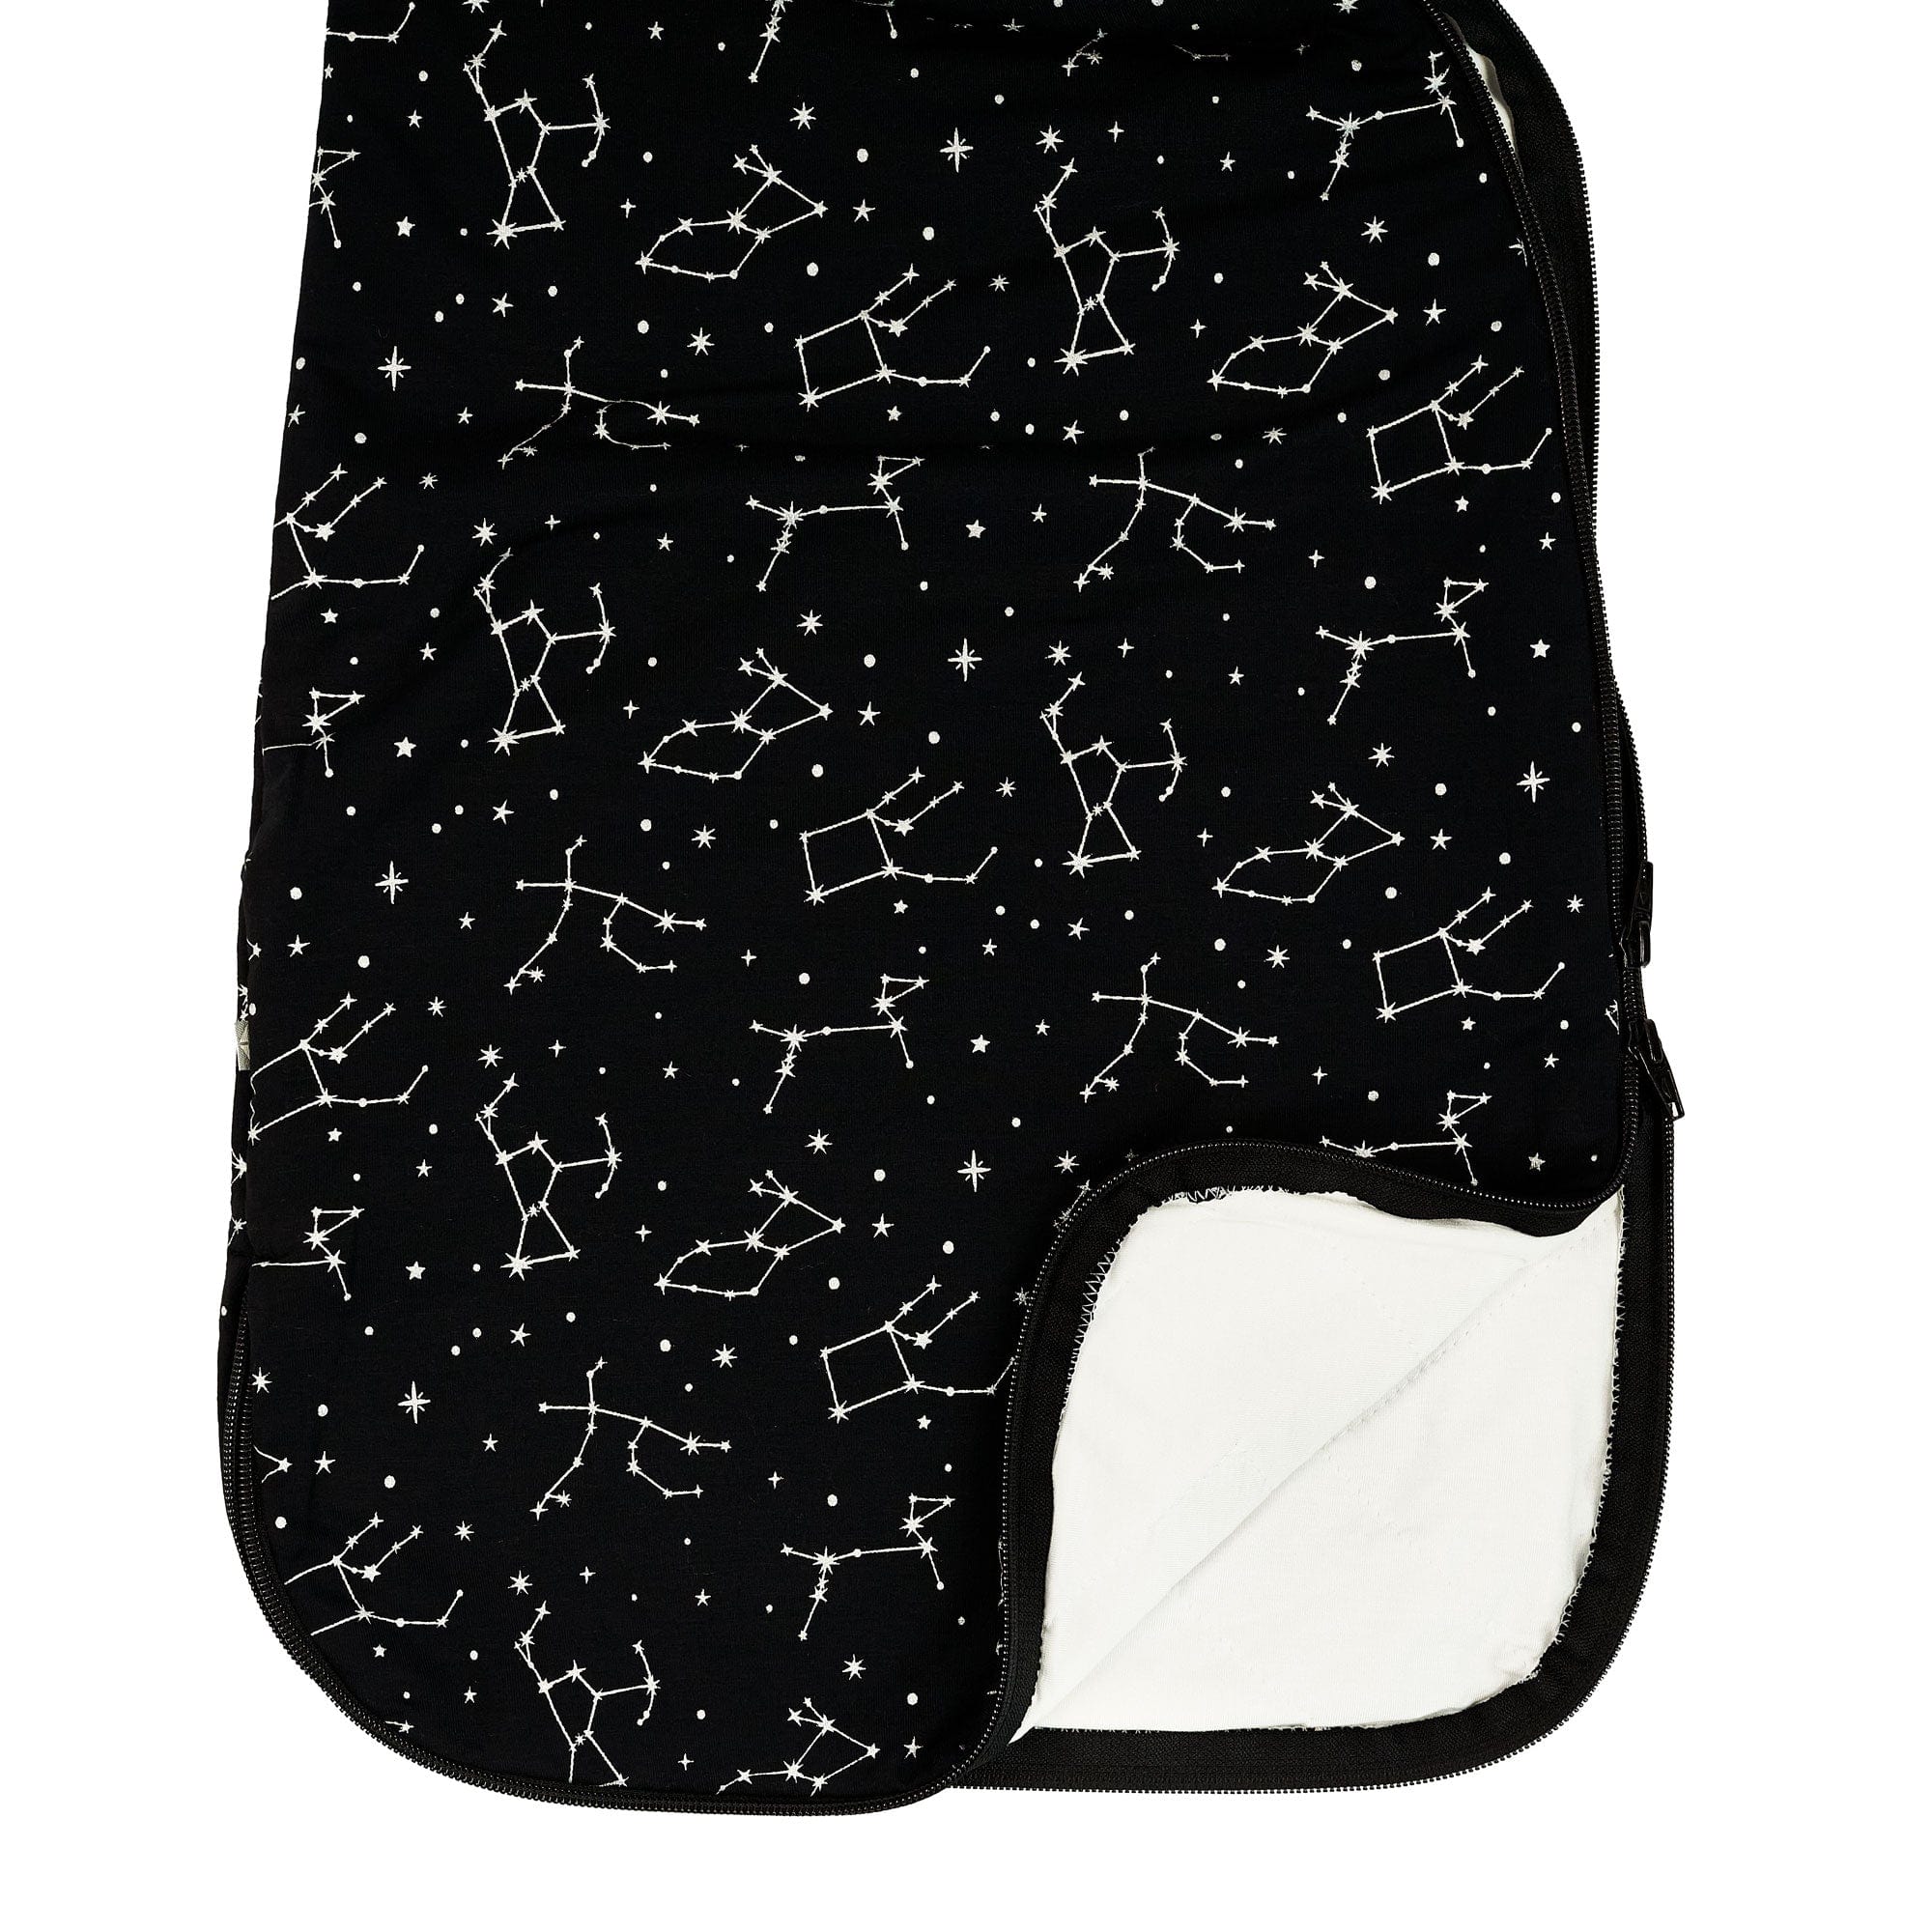 Kyte Baby bamboo Sleep Bag in Midnight Constellation 1.0 double zipper